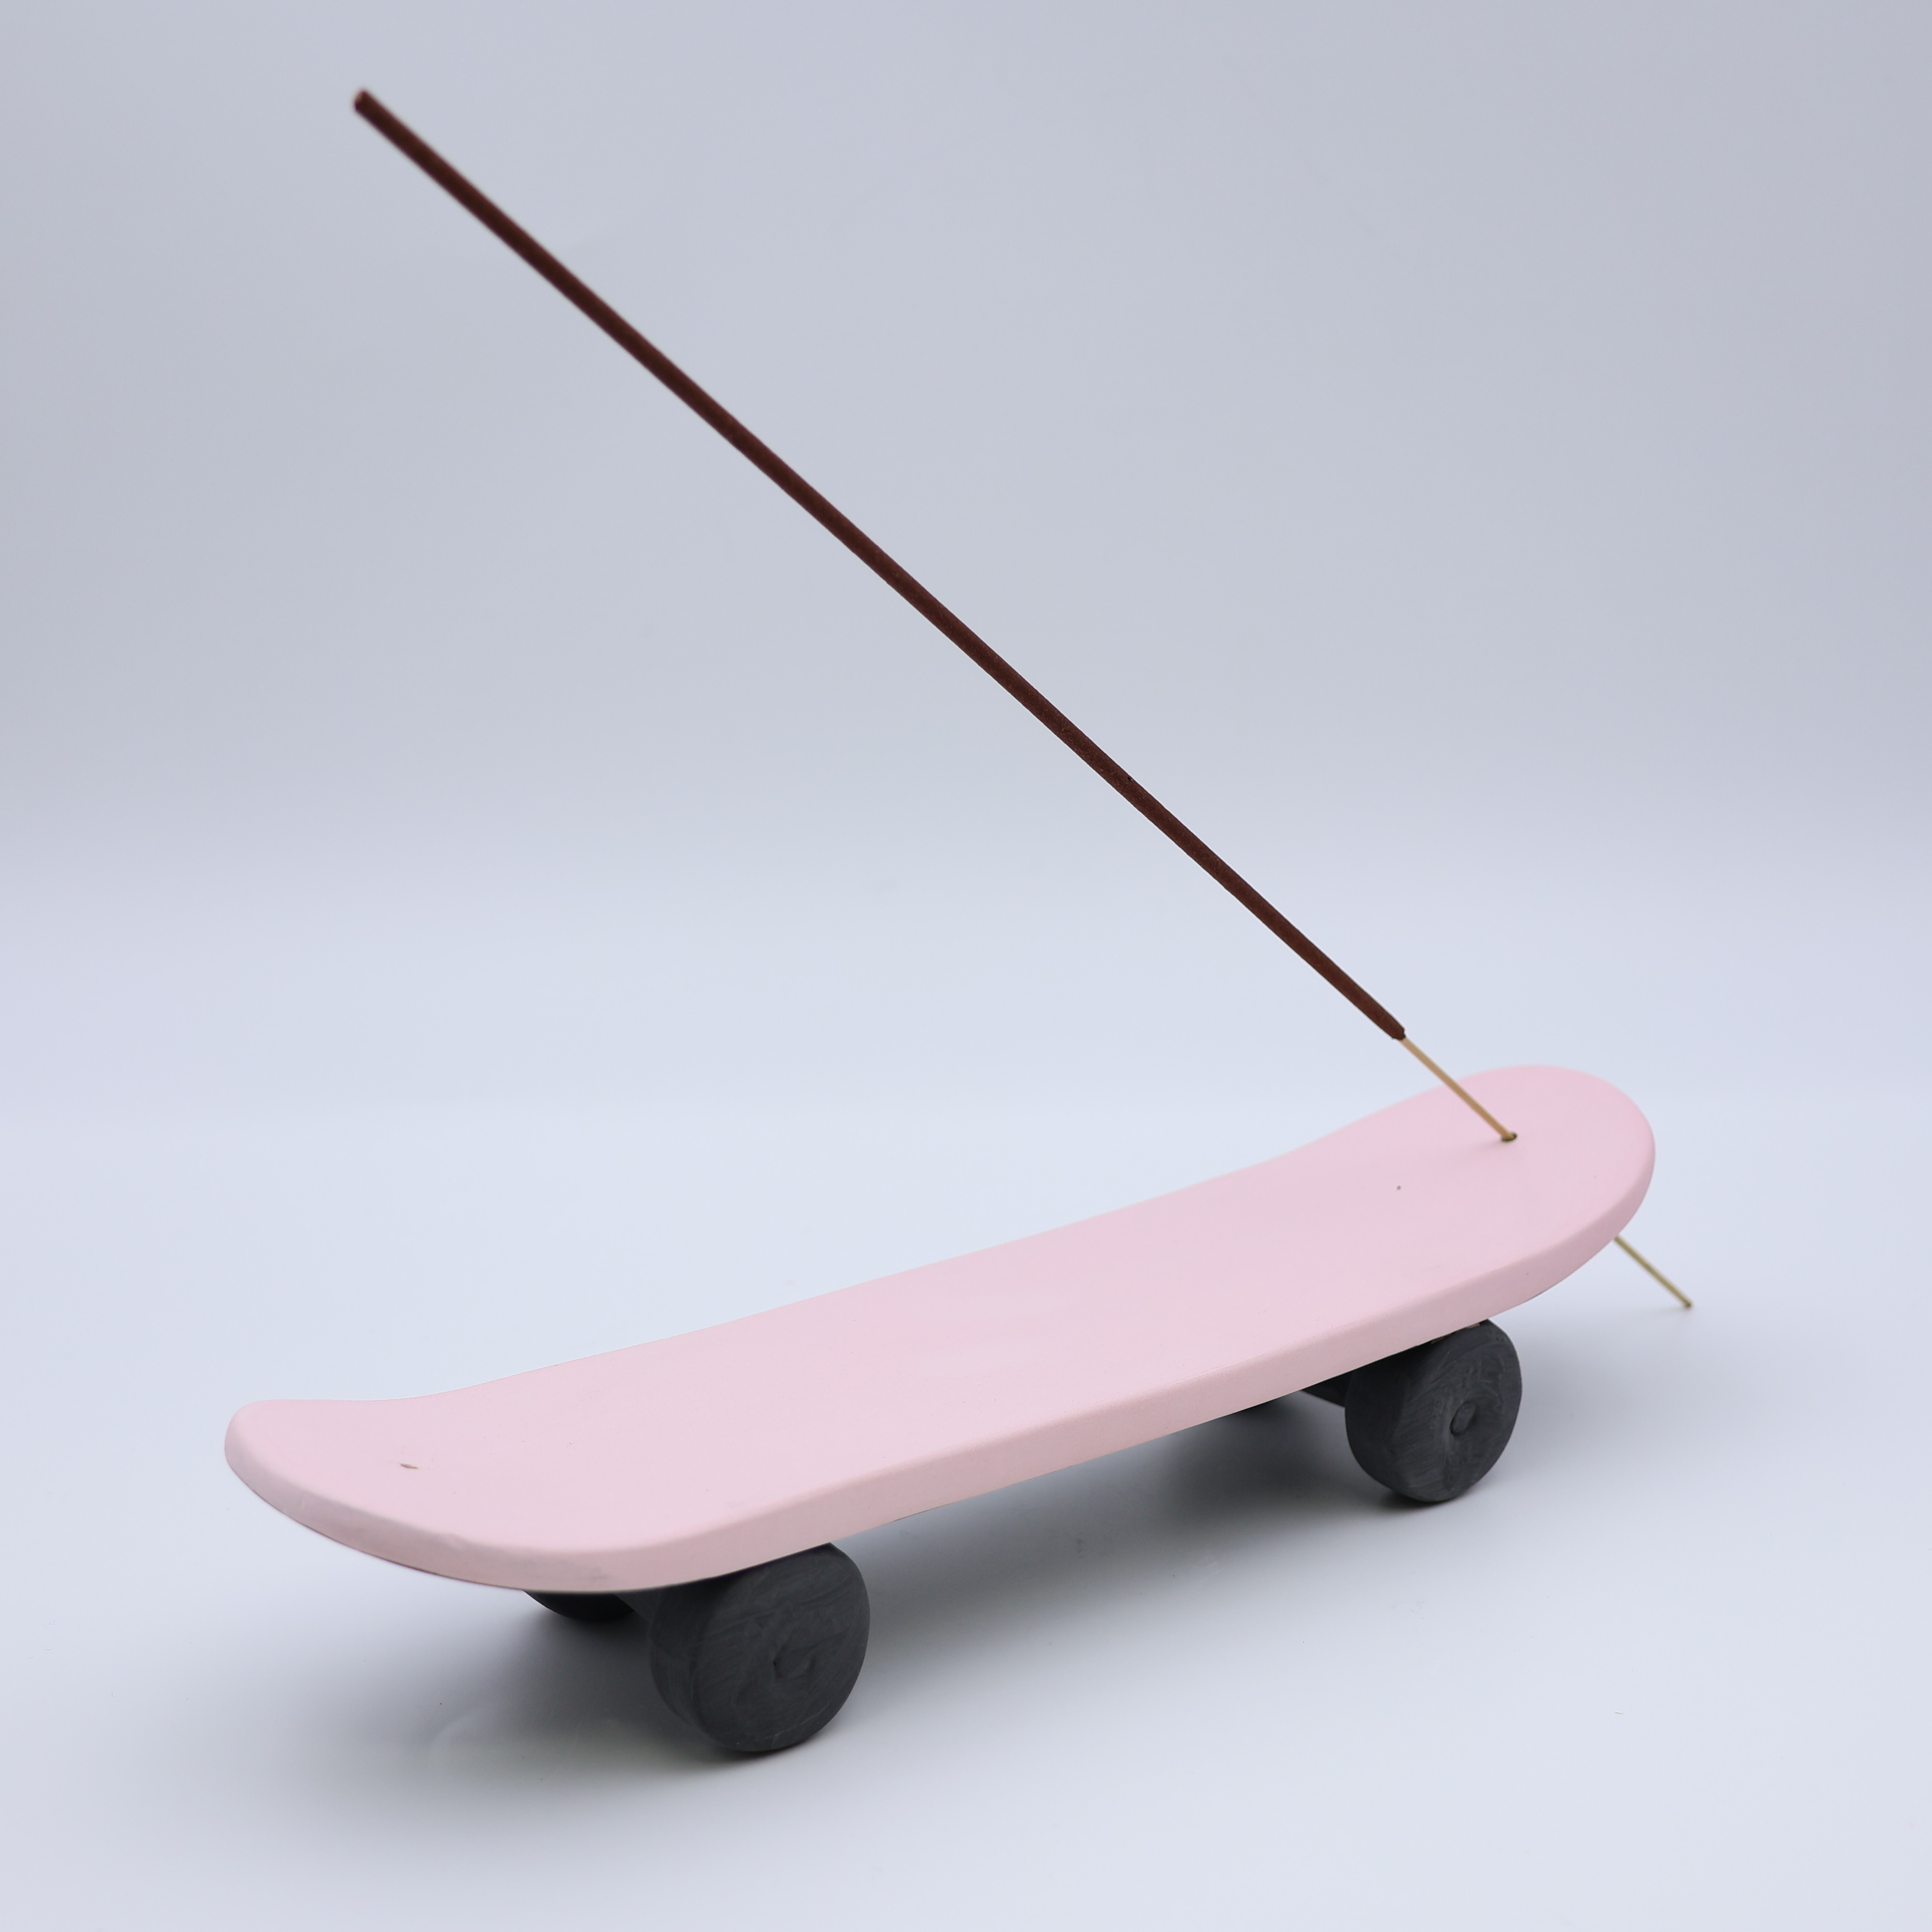 सिरेमिक स्केटबोर्ड धूप धारक गुलाबी